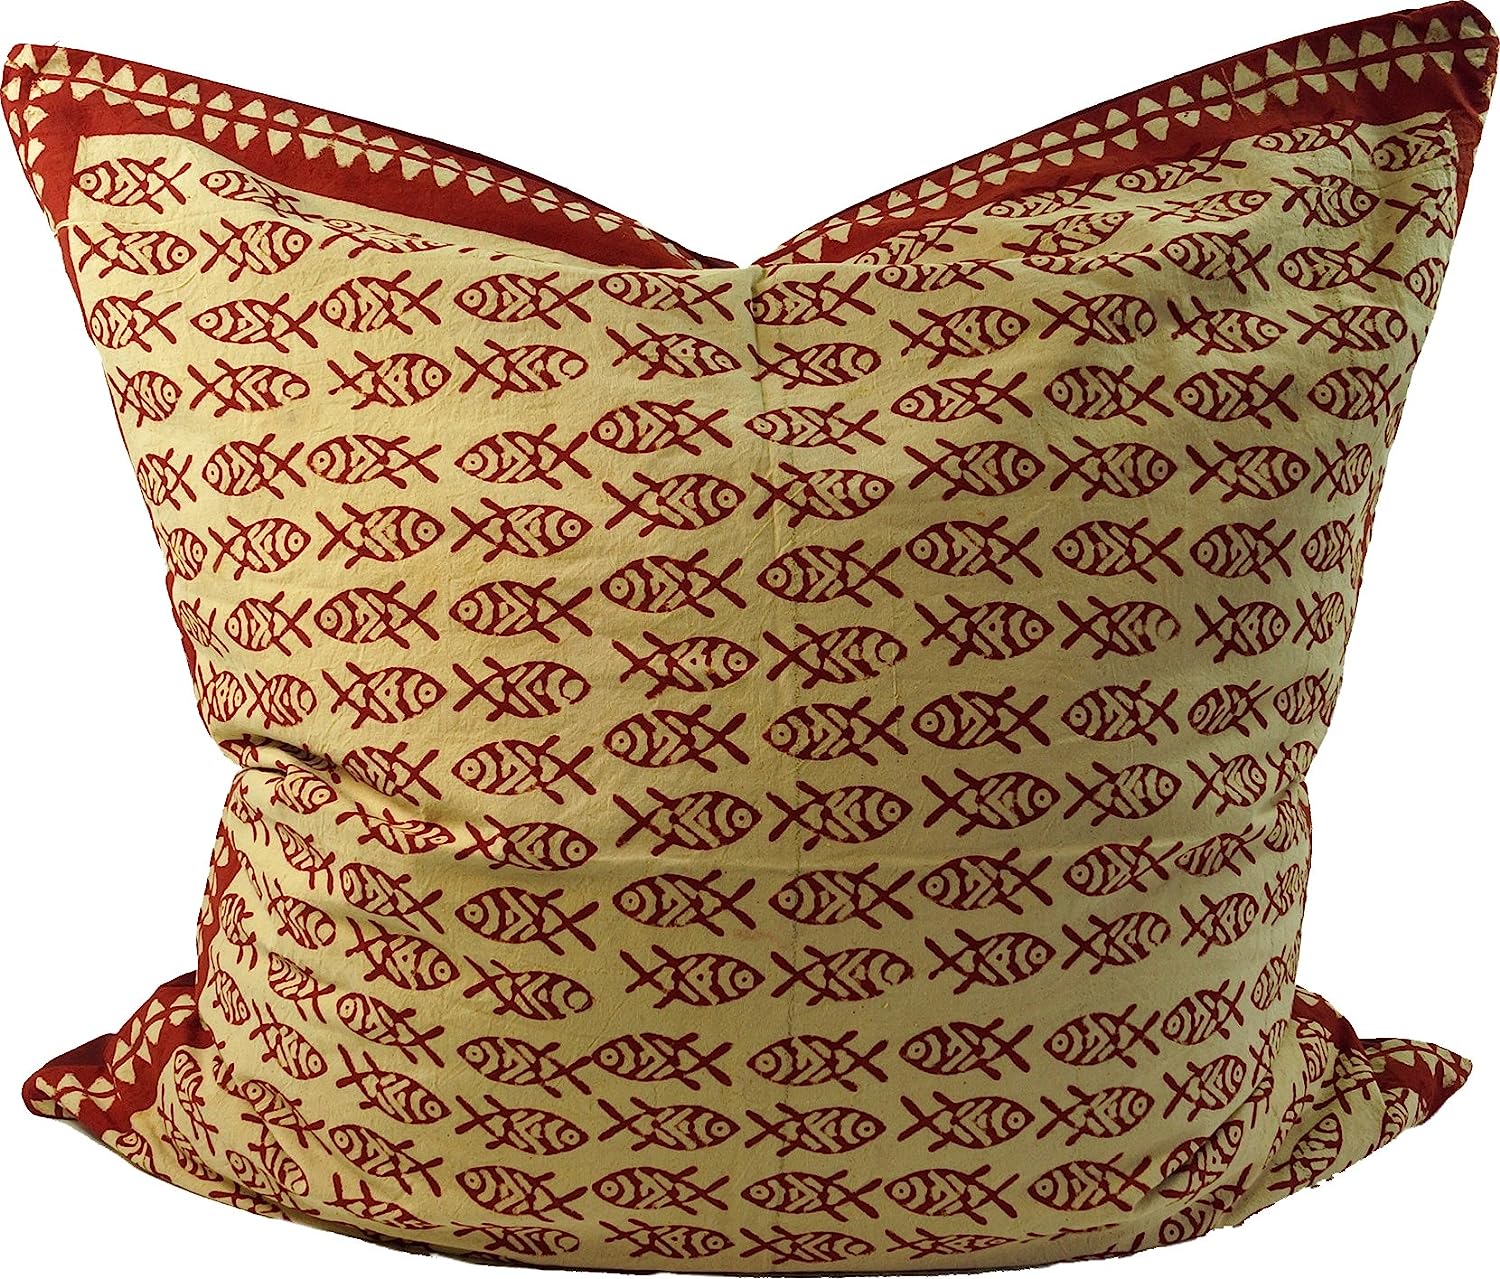 GURU SHOP XL Cushion Cover Block Print, Ethnic Decorative Cushion Cover with Traditional Design - Pattern 10, Red, Cotton, 80 x 80 x 0.2 cm, Decorative Cushion, Sofa Cushion